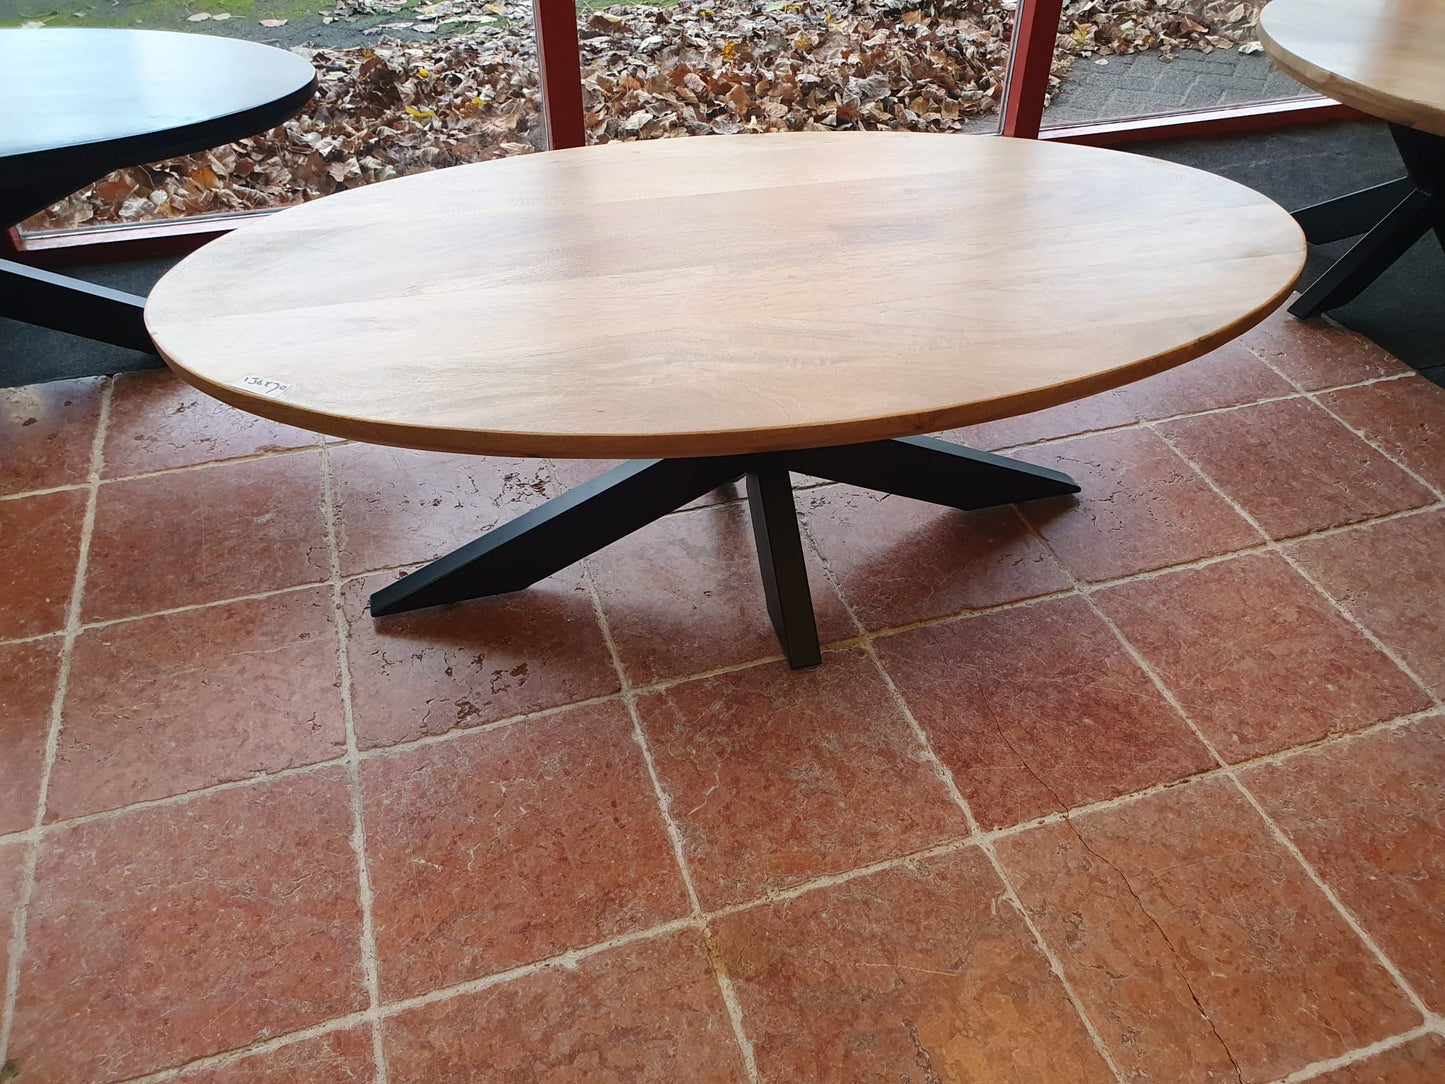 Gladde mangohouten naturelkleurige ovale salontafel met swiss edge 120x60cm incl. zwart metalen matrix/spinpoot